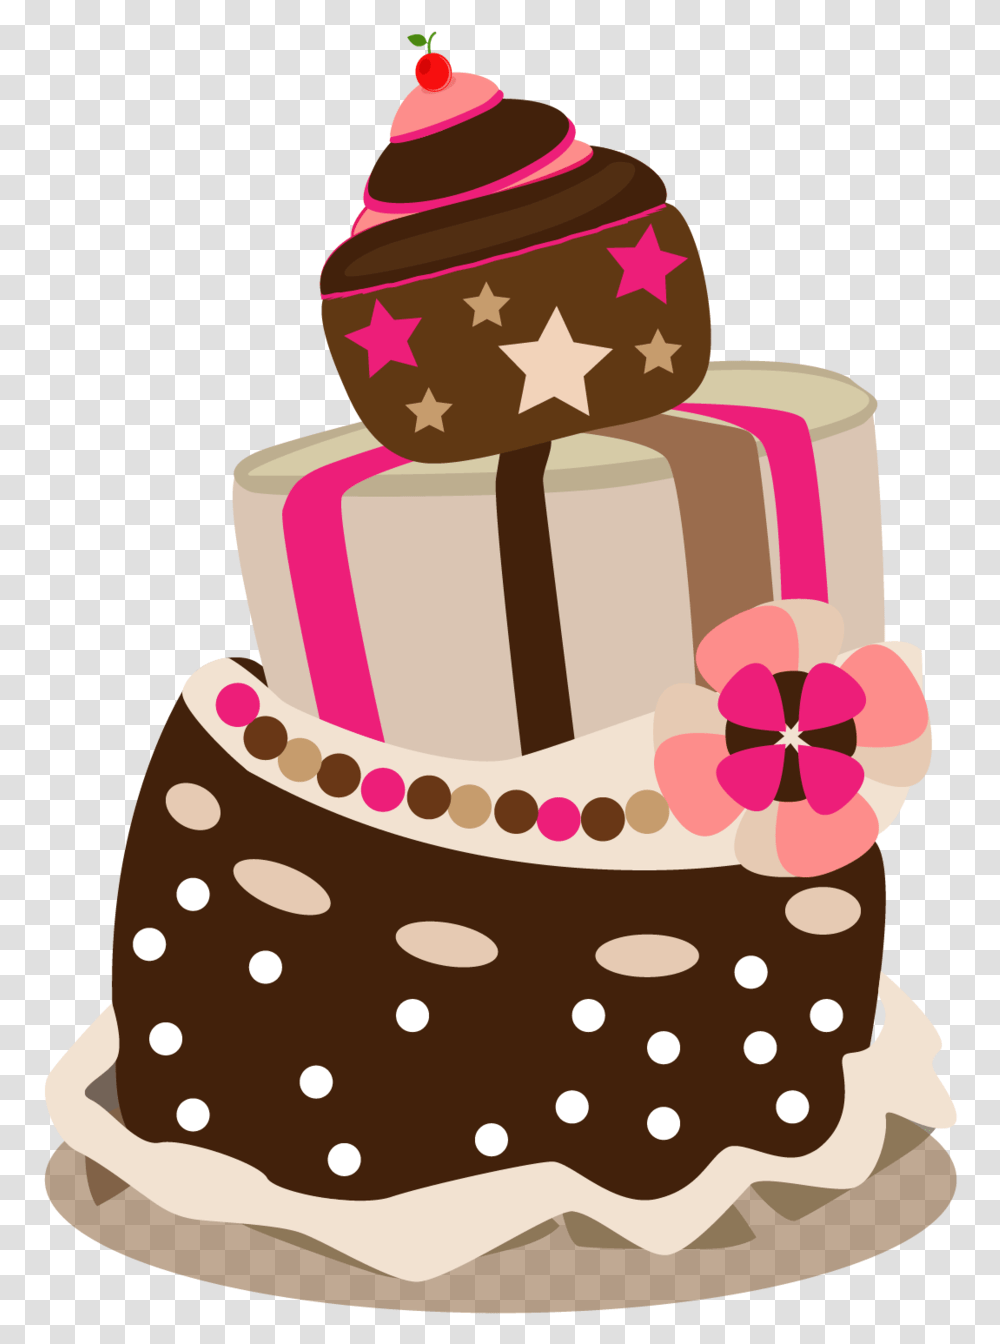 Freevector Vector Birthday Cake Vector Birthday Cake, Dessert, Food, Wedding Cake, Sweets Transparent Png